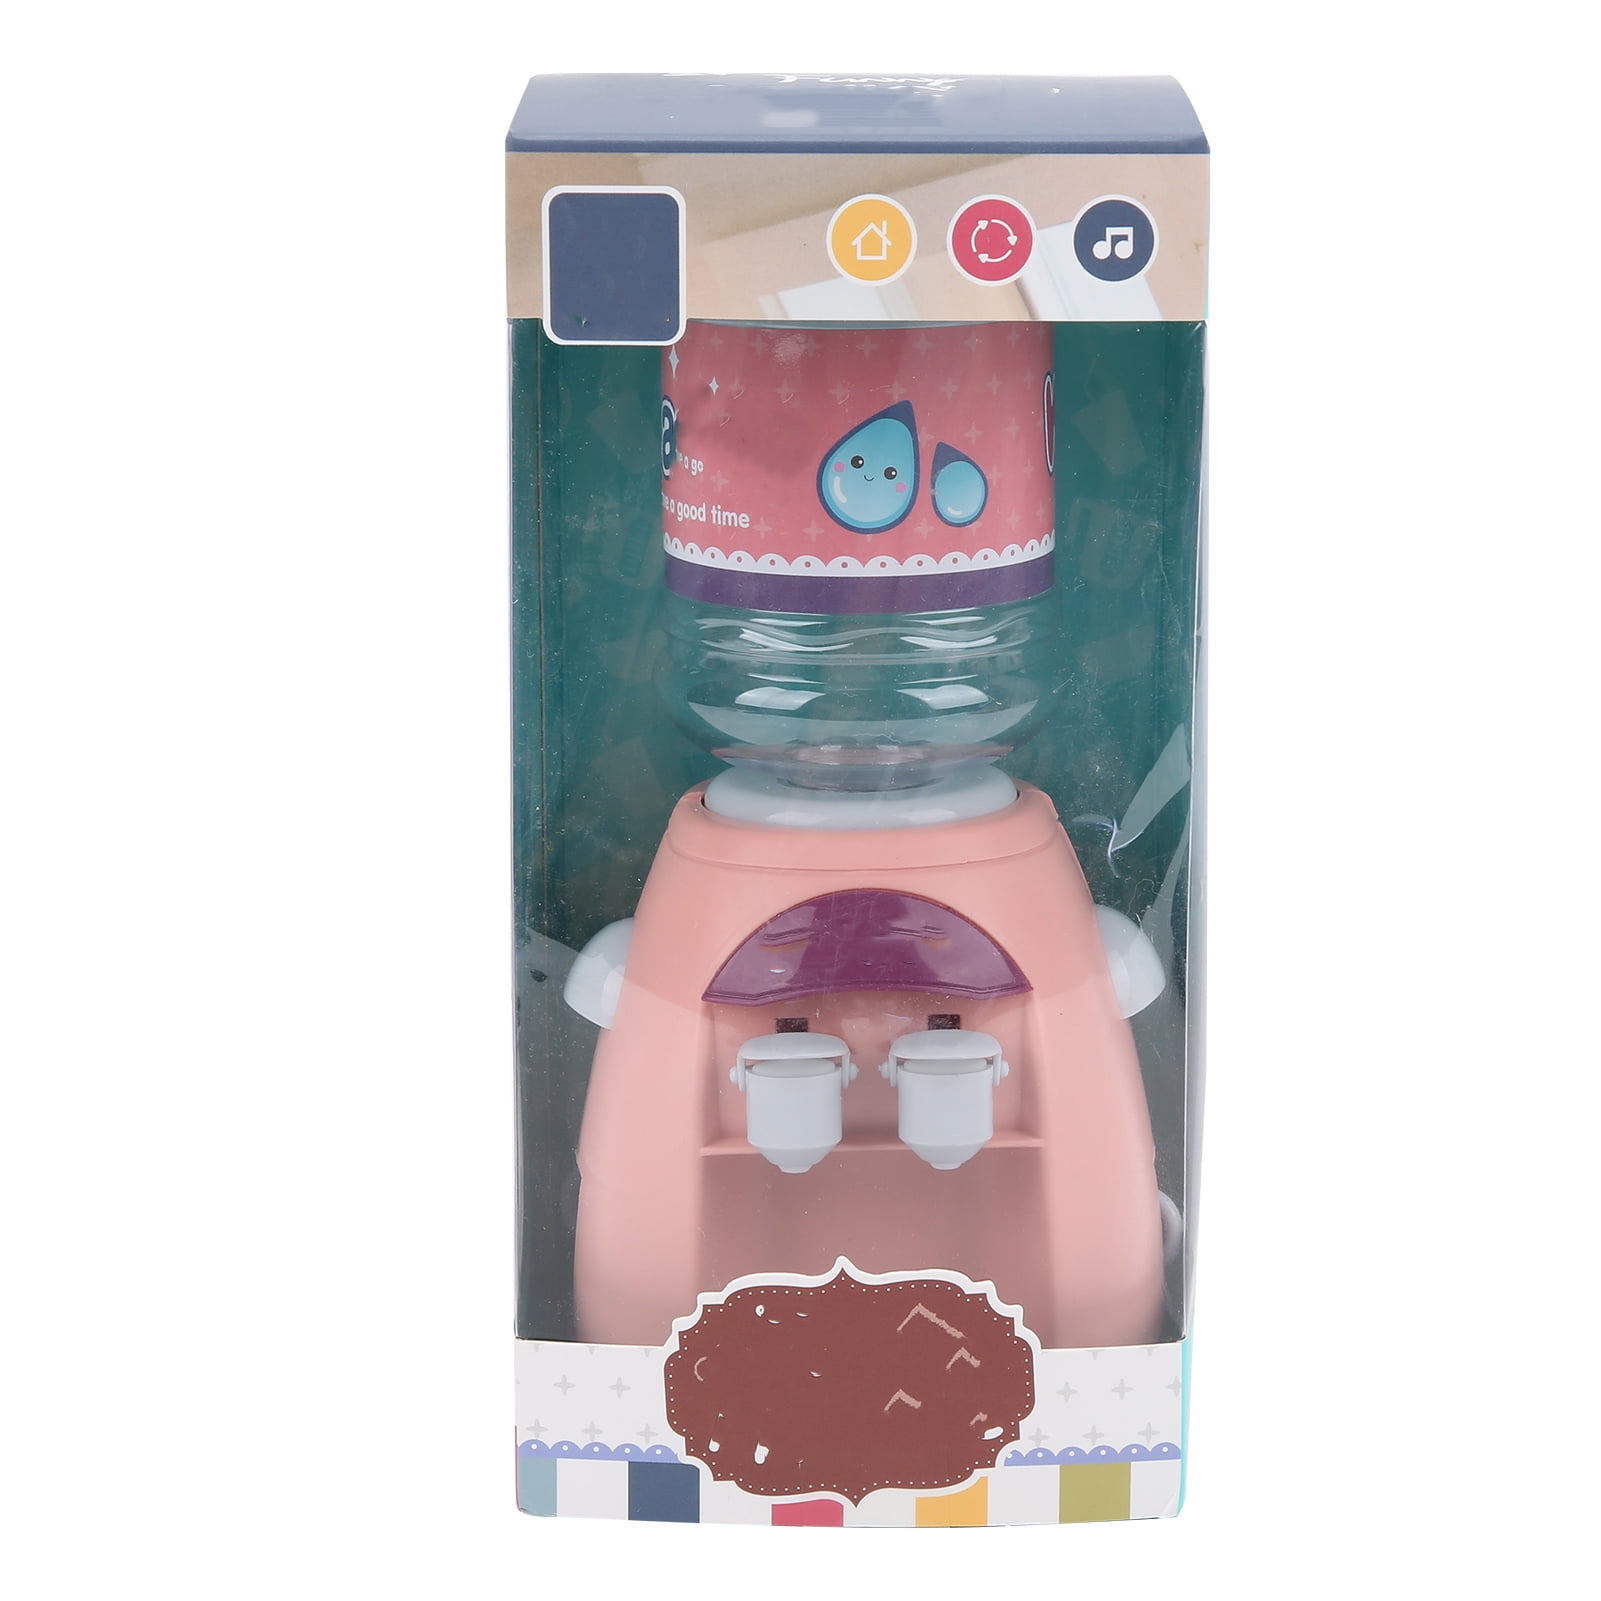 BRIGPICIOUS Mini Water Cooler Dispenser Toy,Small Desk Top Cute Water  Dispenser for Bedroom,Toy Drink Machine Kawaii Water Dispenser for Boys